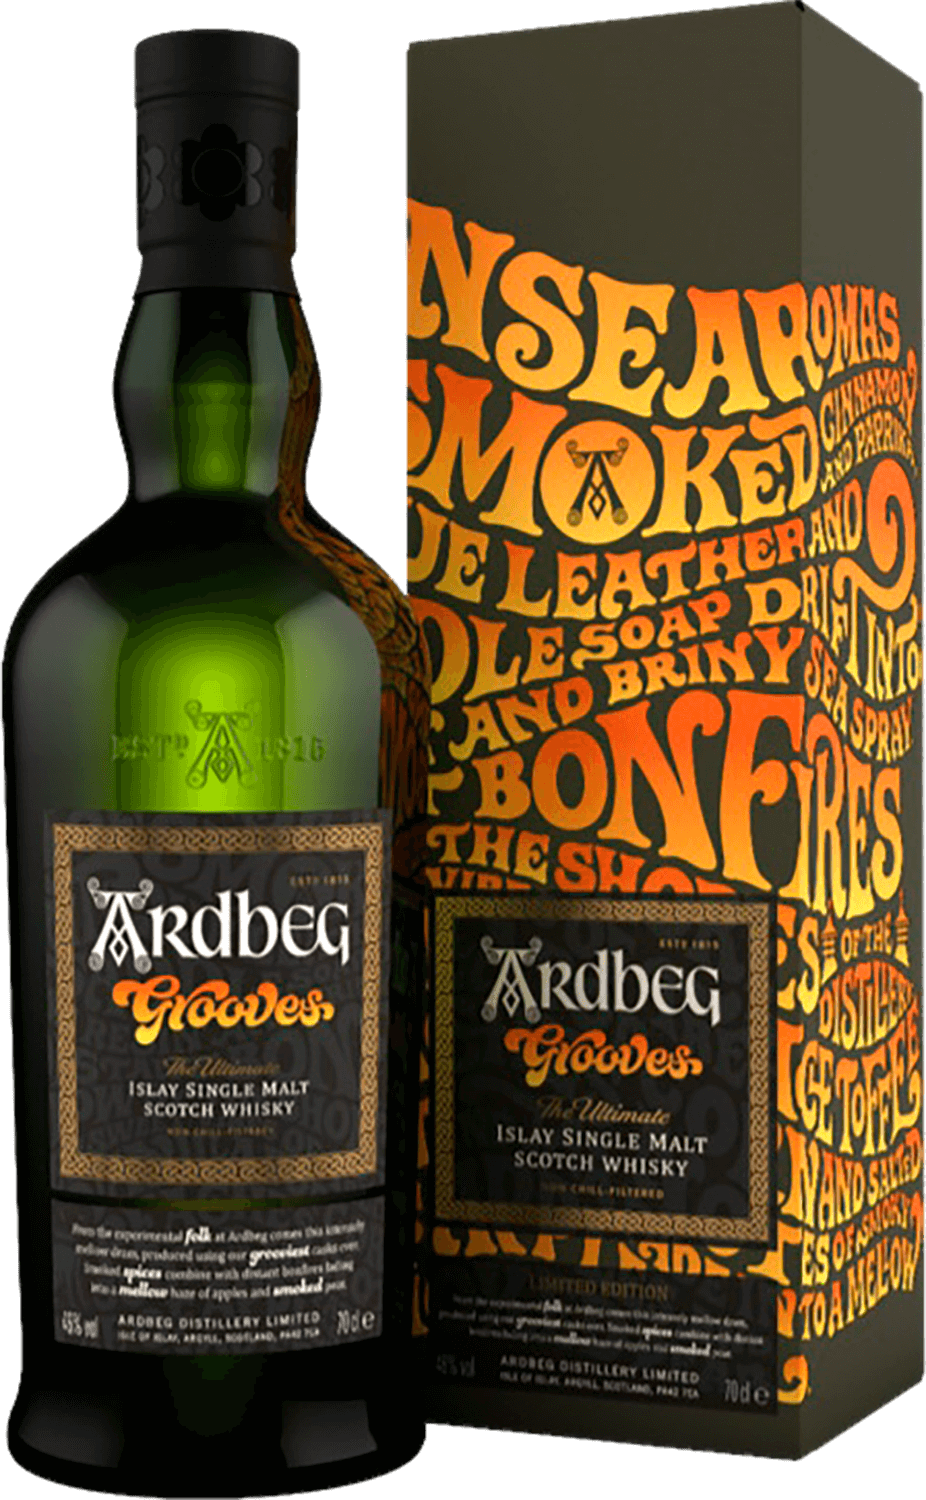 Ardbeg Grooves Islay Single Malt Scotch Whisky (gift box) wemyss malts pepper on your srawberries bunnahabhain 1991 islay single cask single malt scotch whisky 27 y o gift box